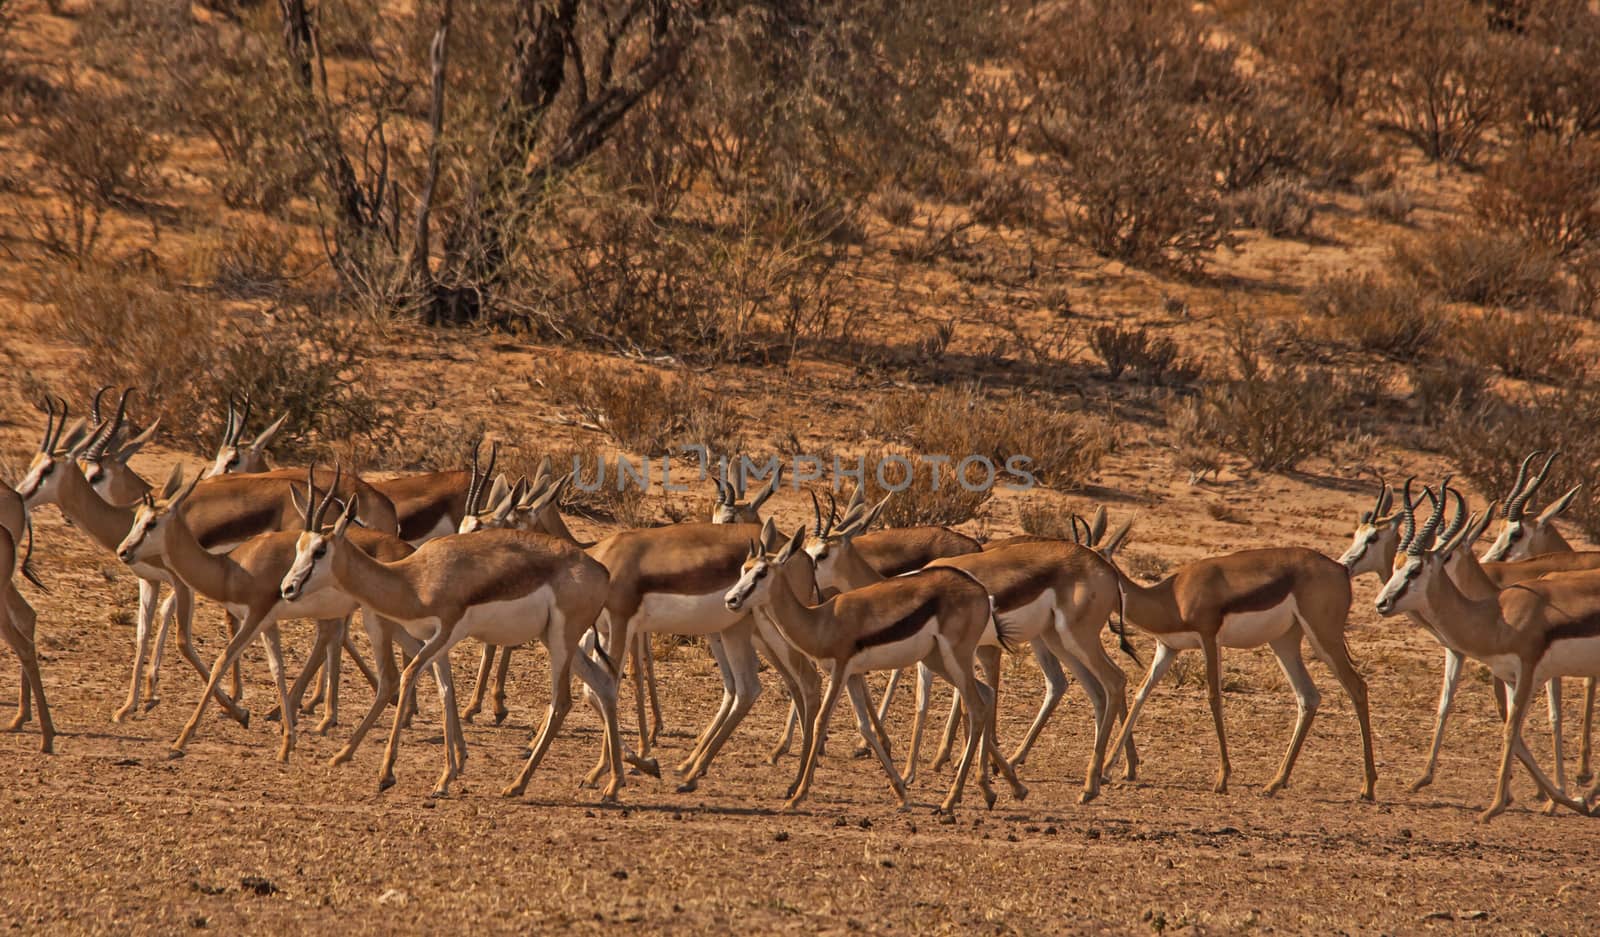 Herd of springbok on the move by kobus_peche